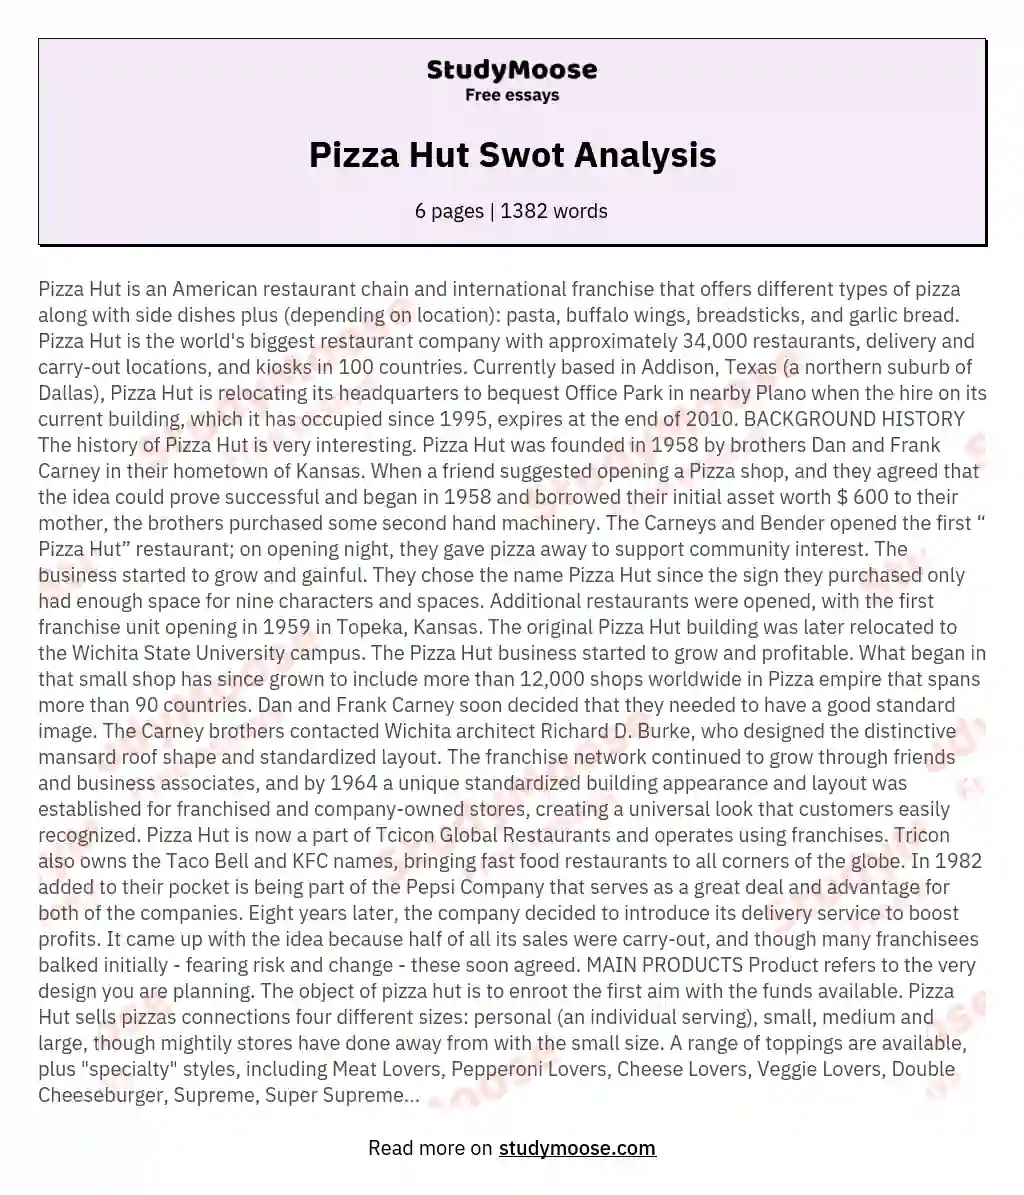 Pizza Hut Swot Analysis essay